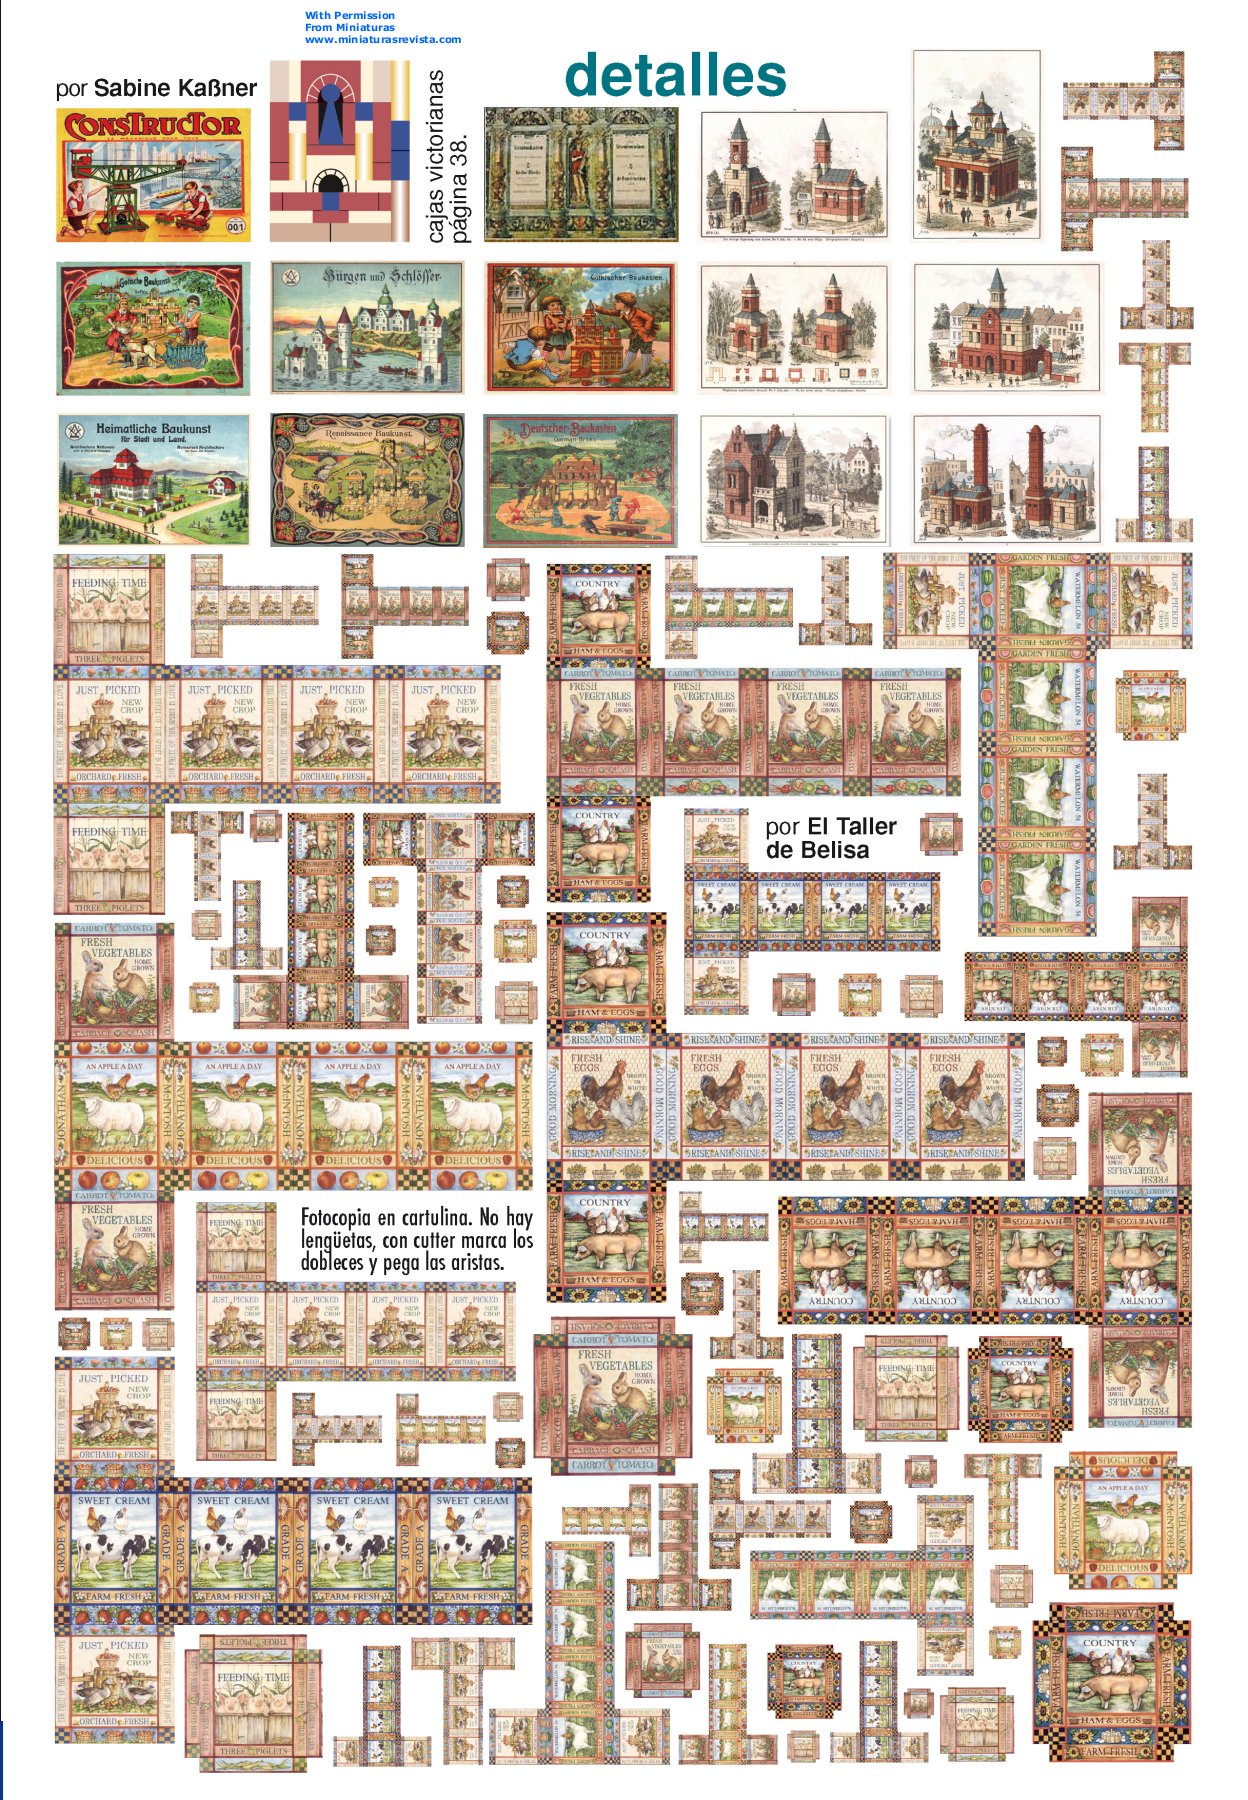 49 Miniature Dollhouse Wallpaper Prints Free On Wallpapersafari